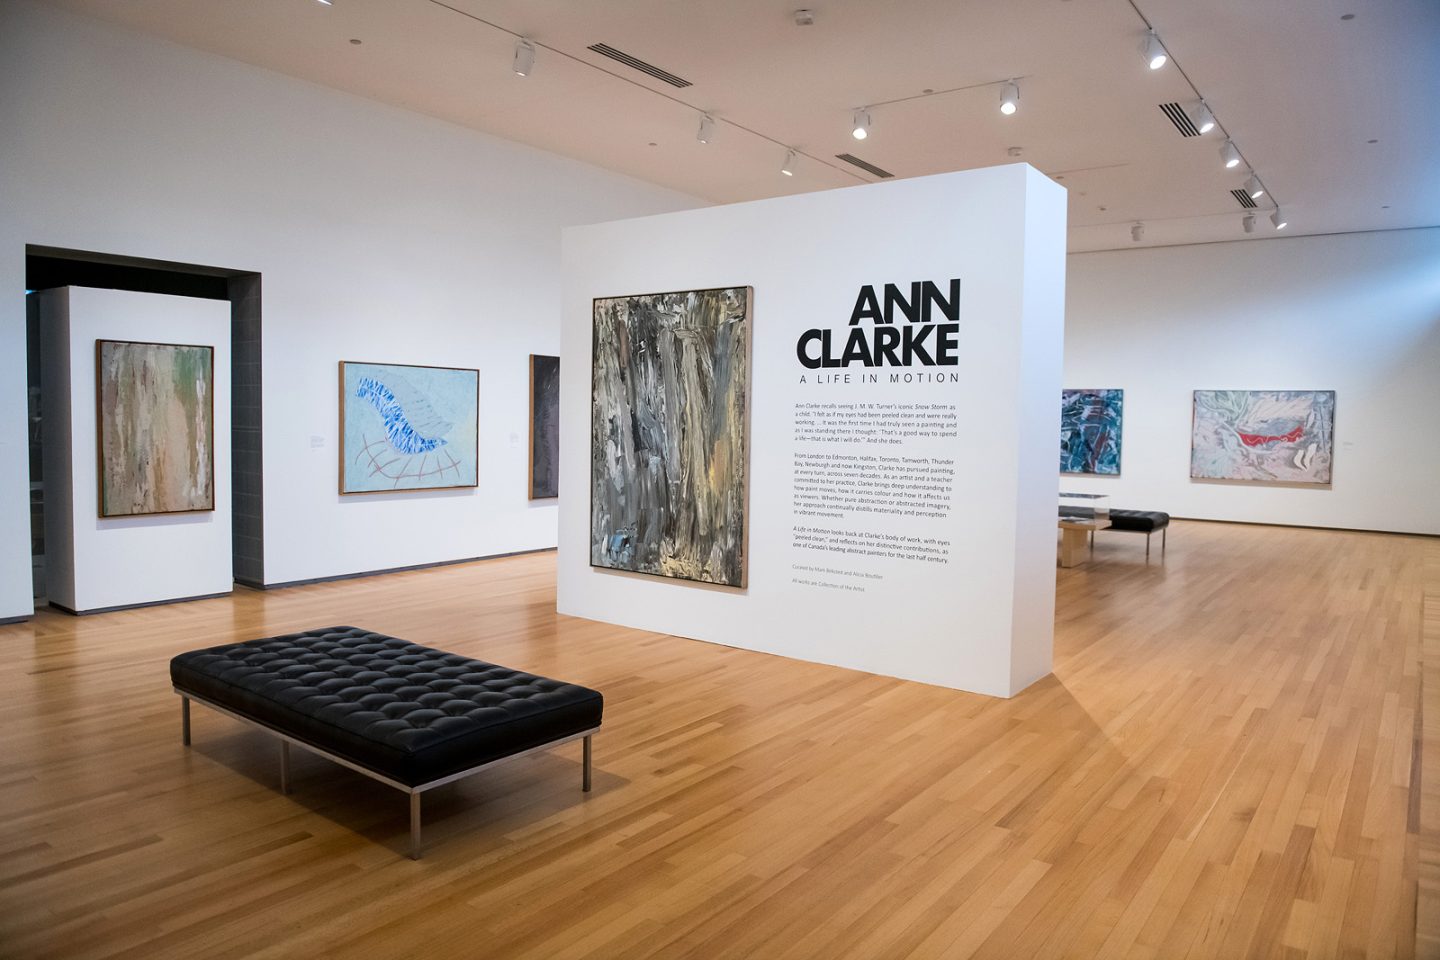 Installation view of Ann Clarke: A Life in Motion. Photo: Garrett Elliott